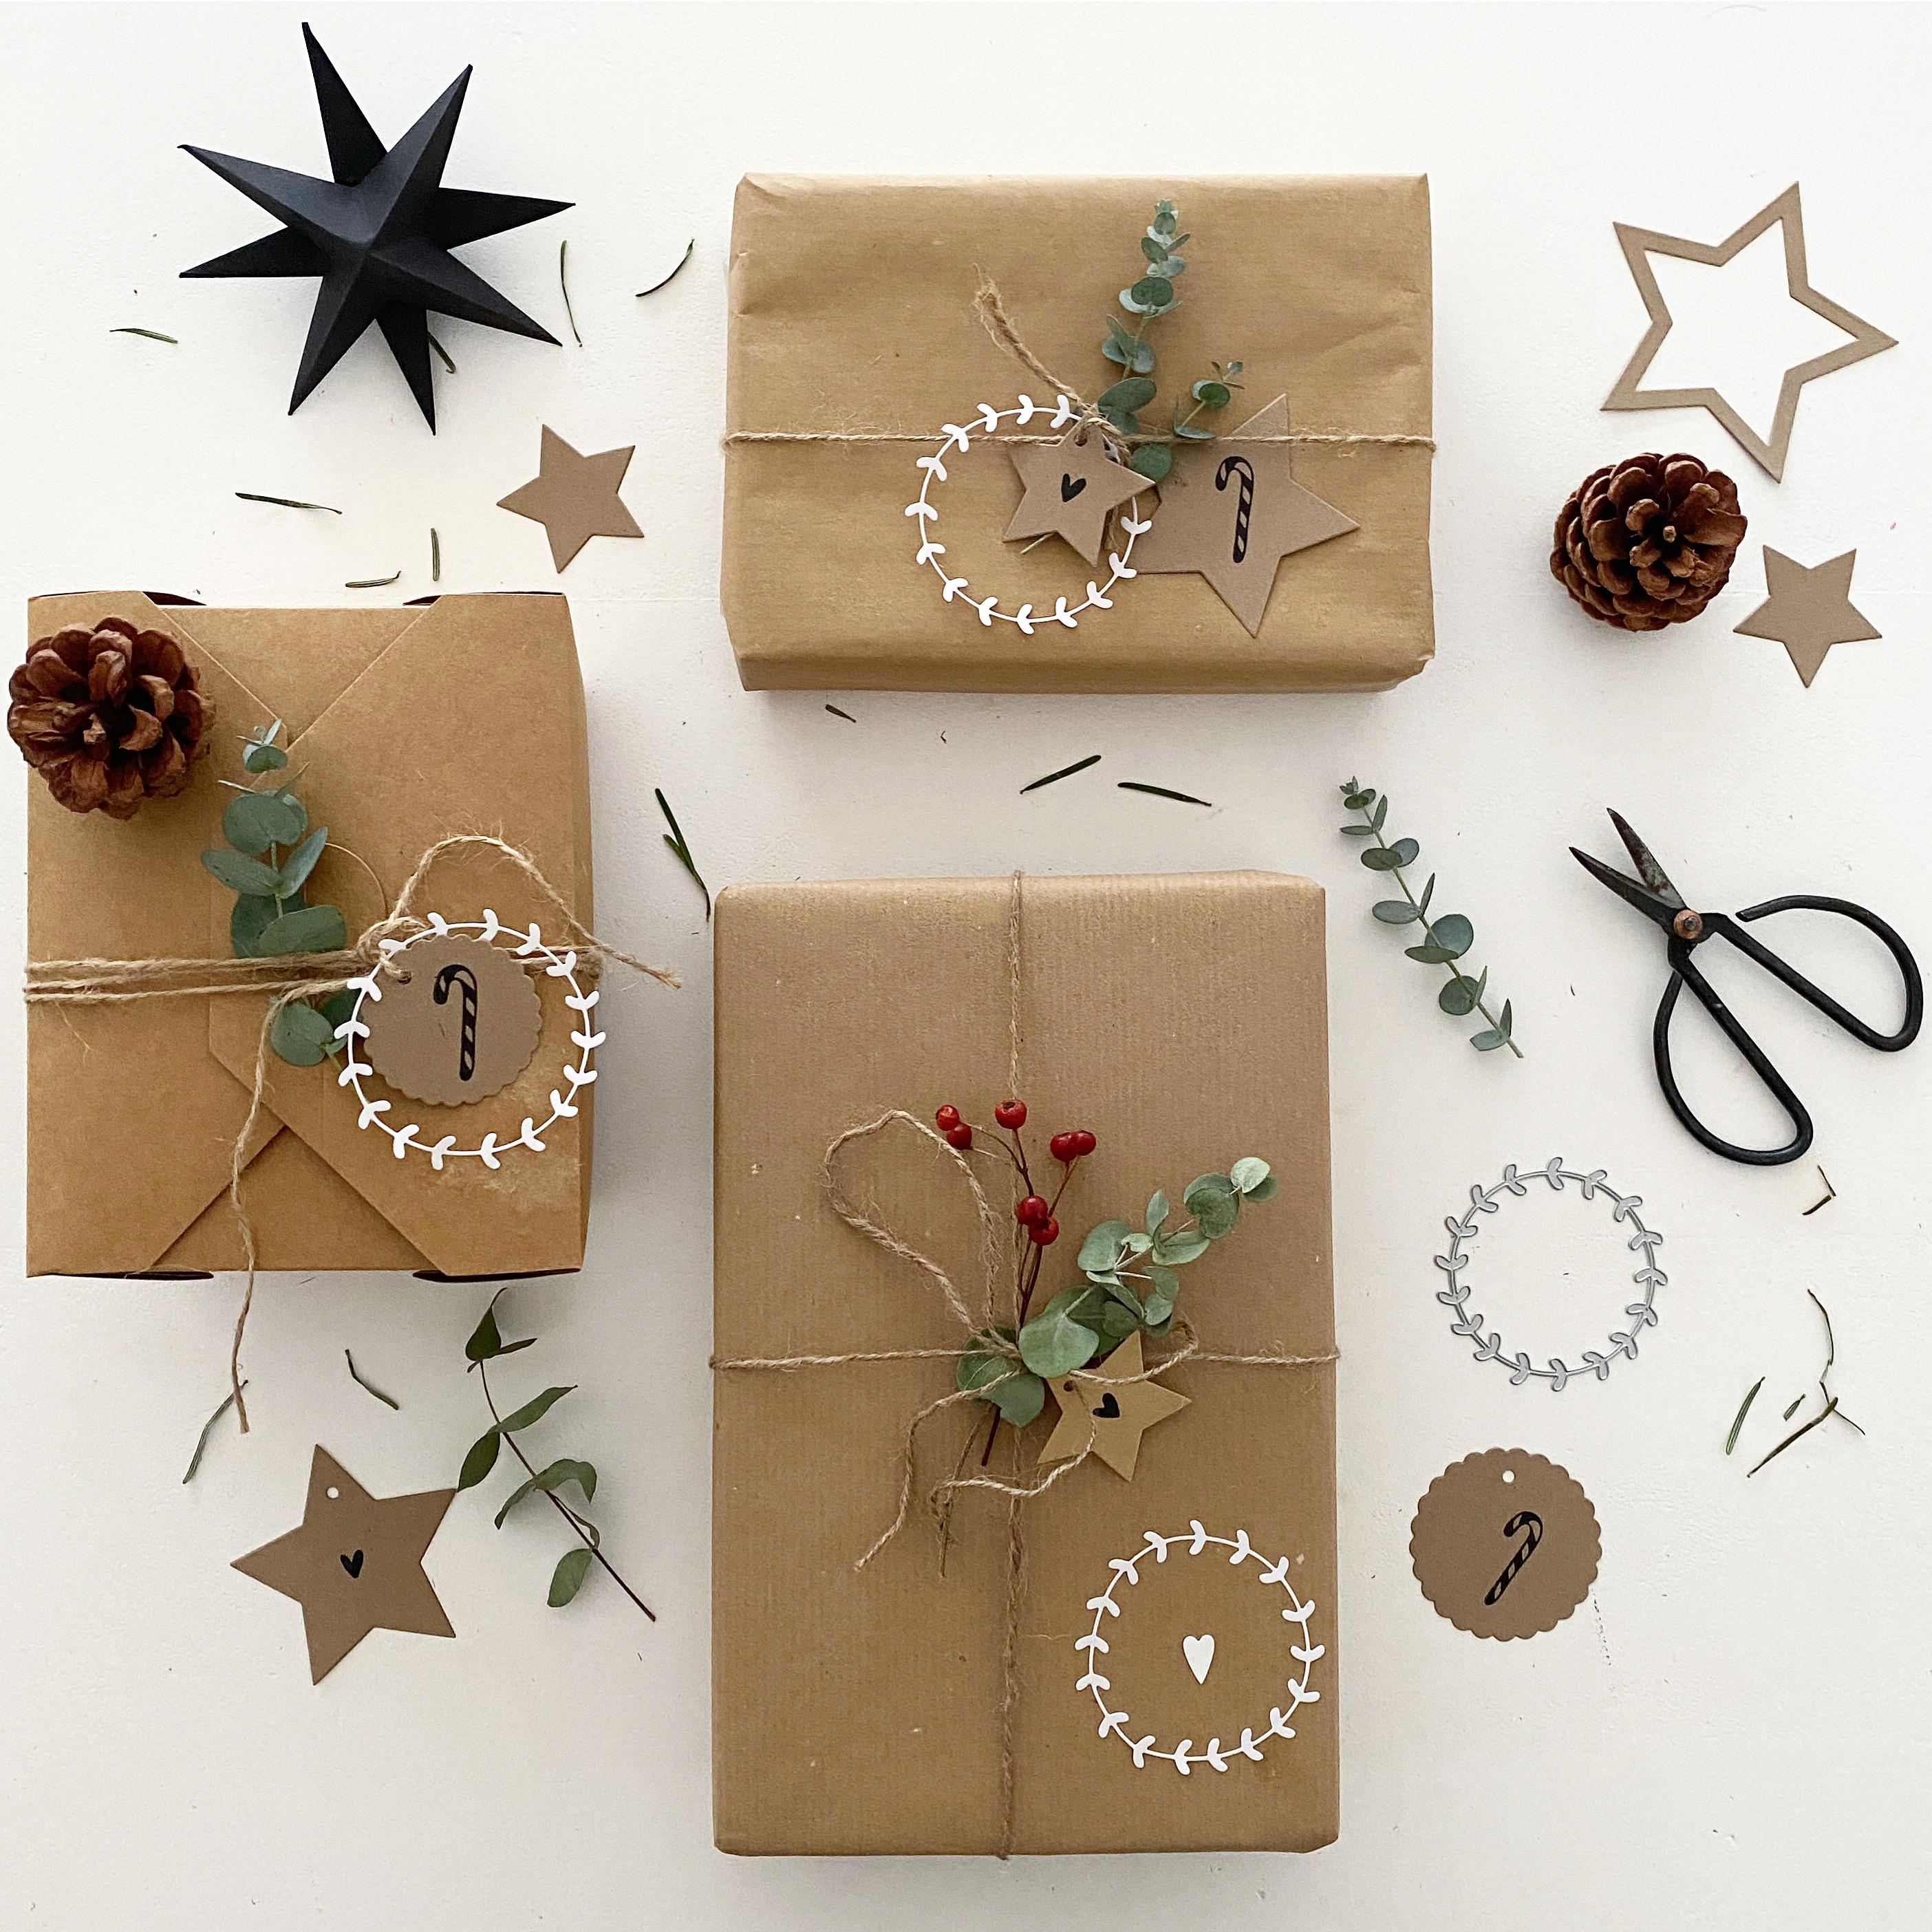 Verpackungsliebe

#geschenke #verpackungsliebe #wrapping #handmade #selbstgemacht 